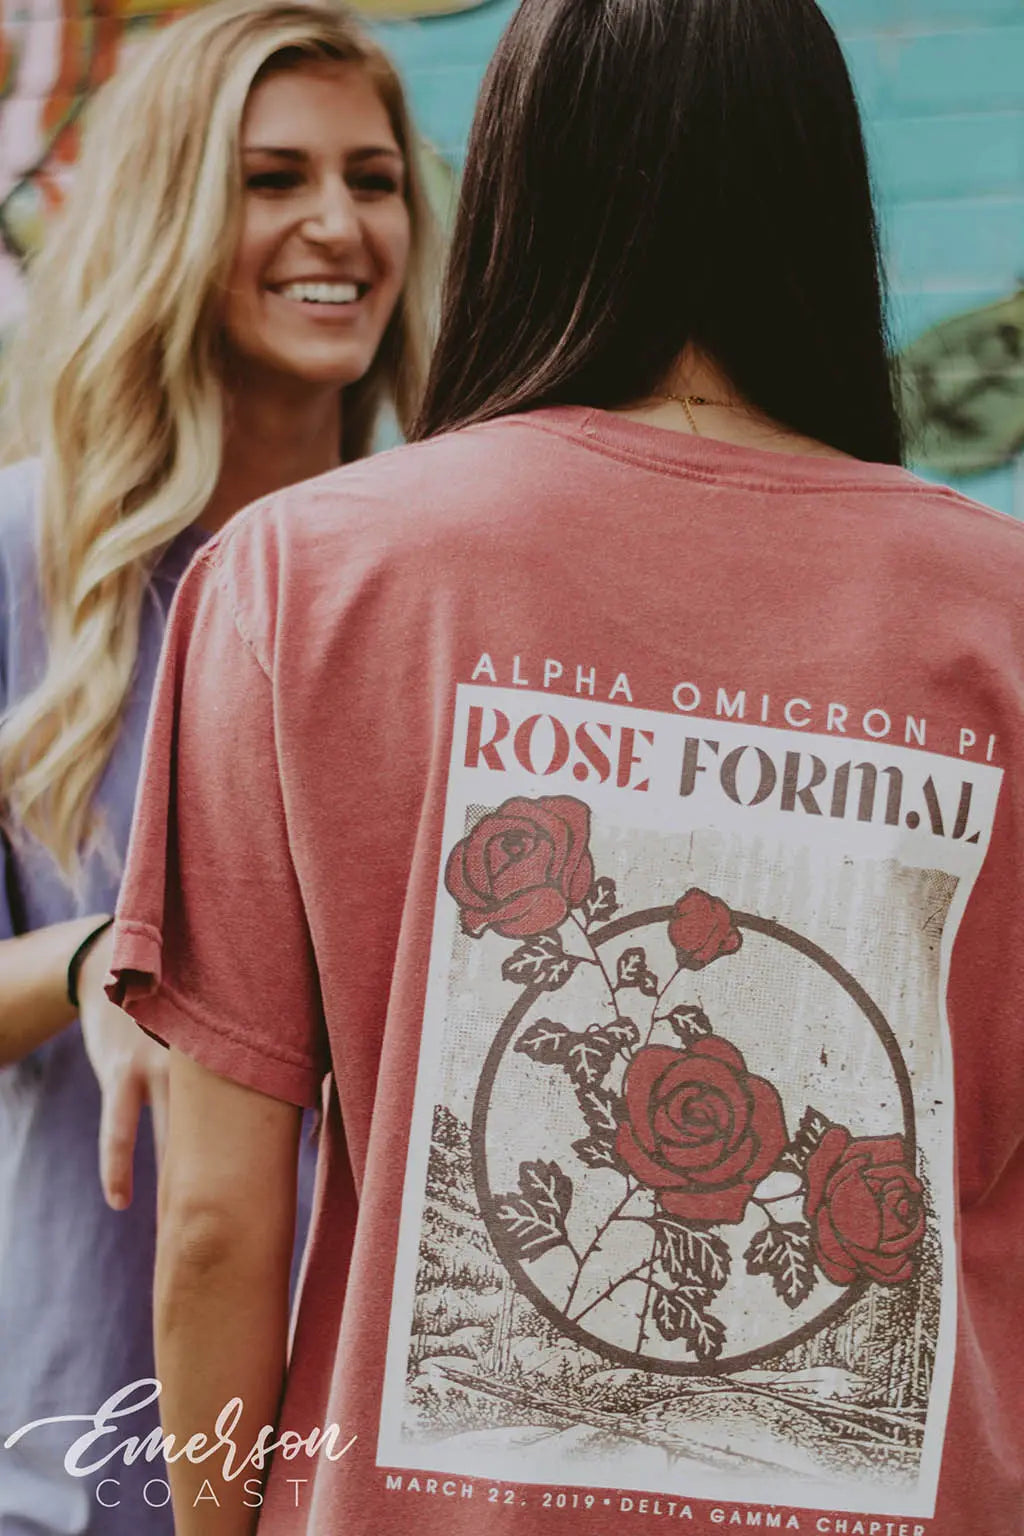 AOPi Rose Formal T-shirt